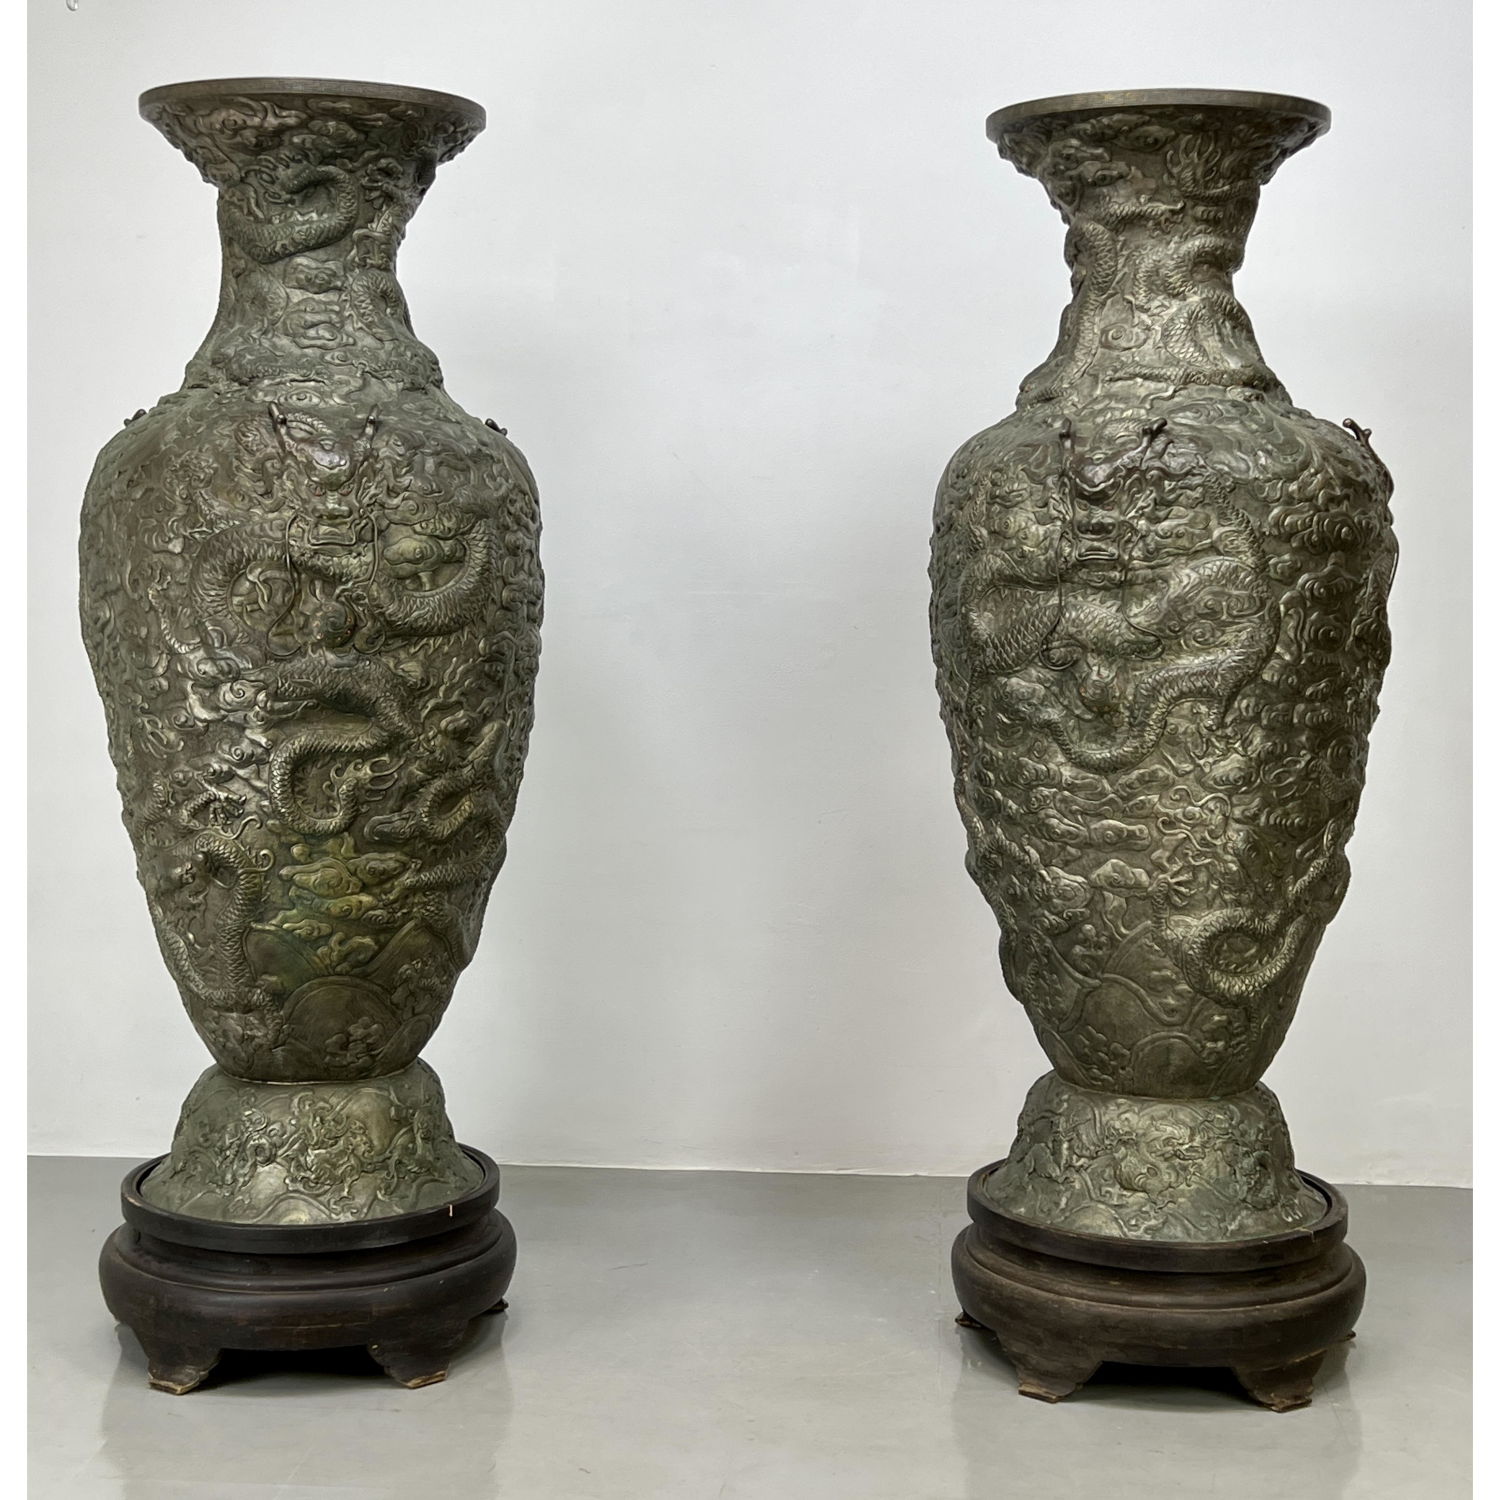 Pr 7 foot Tall Metal Urns Vases.